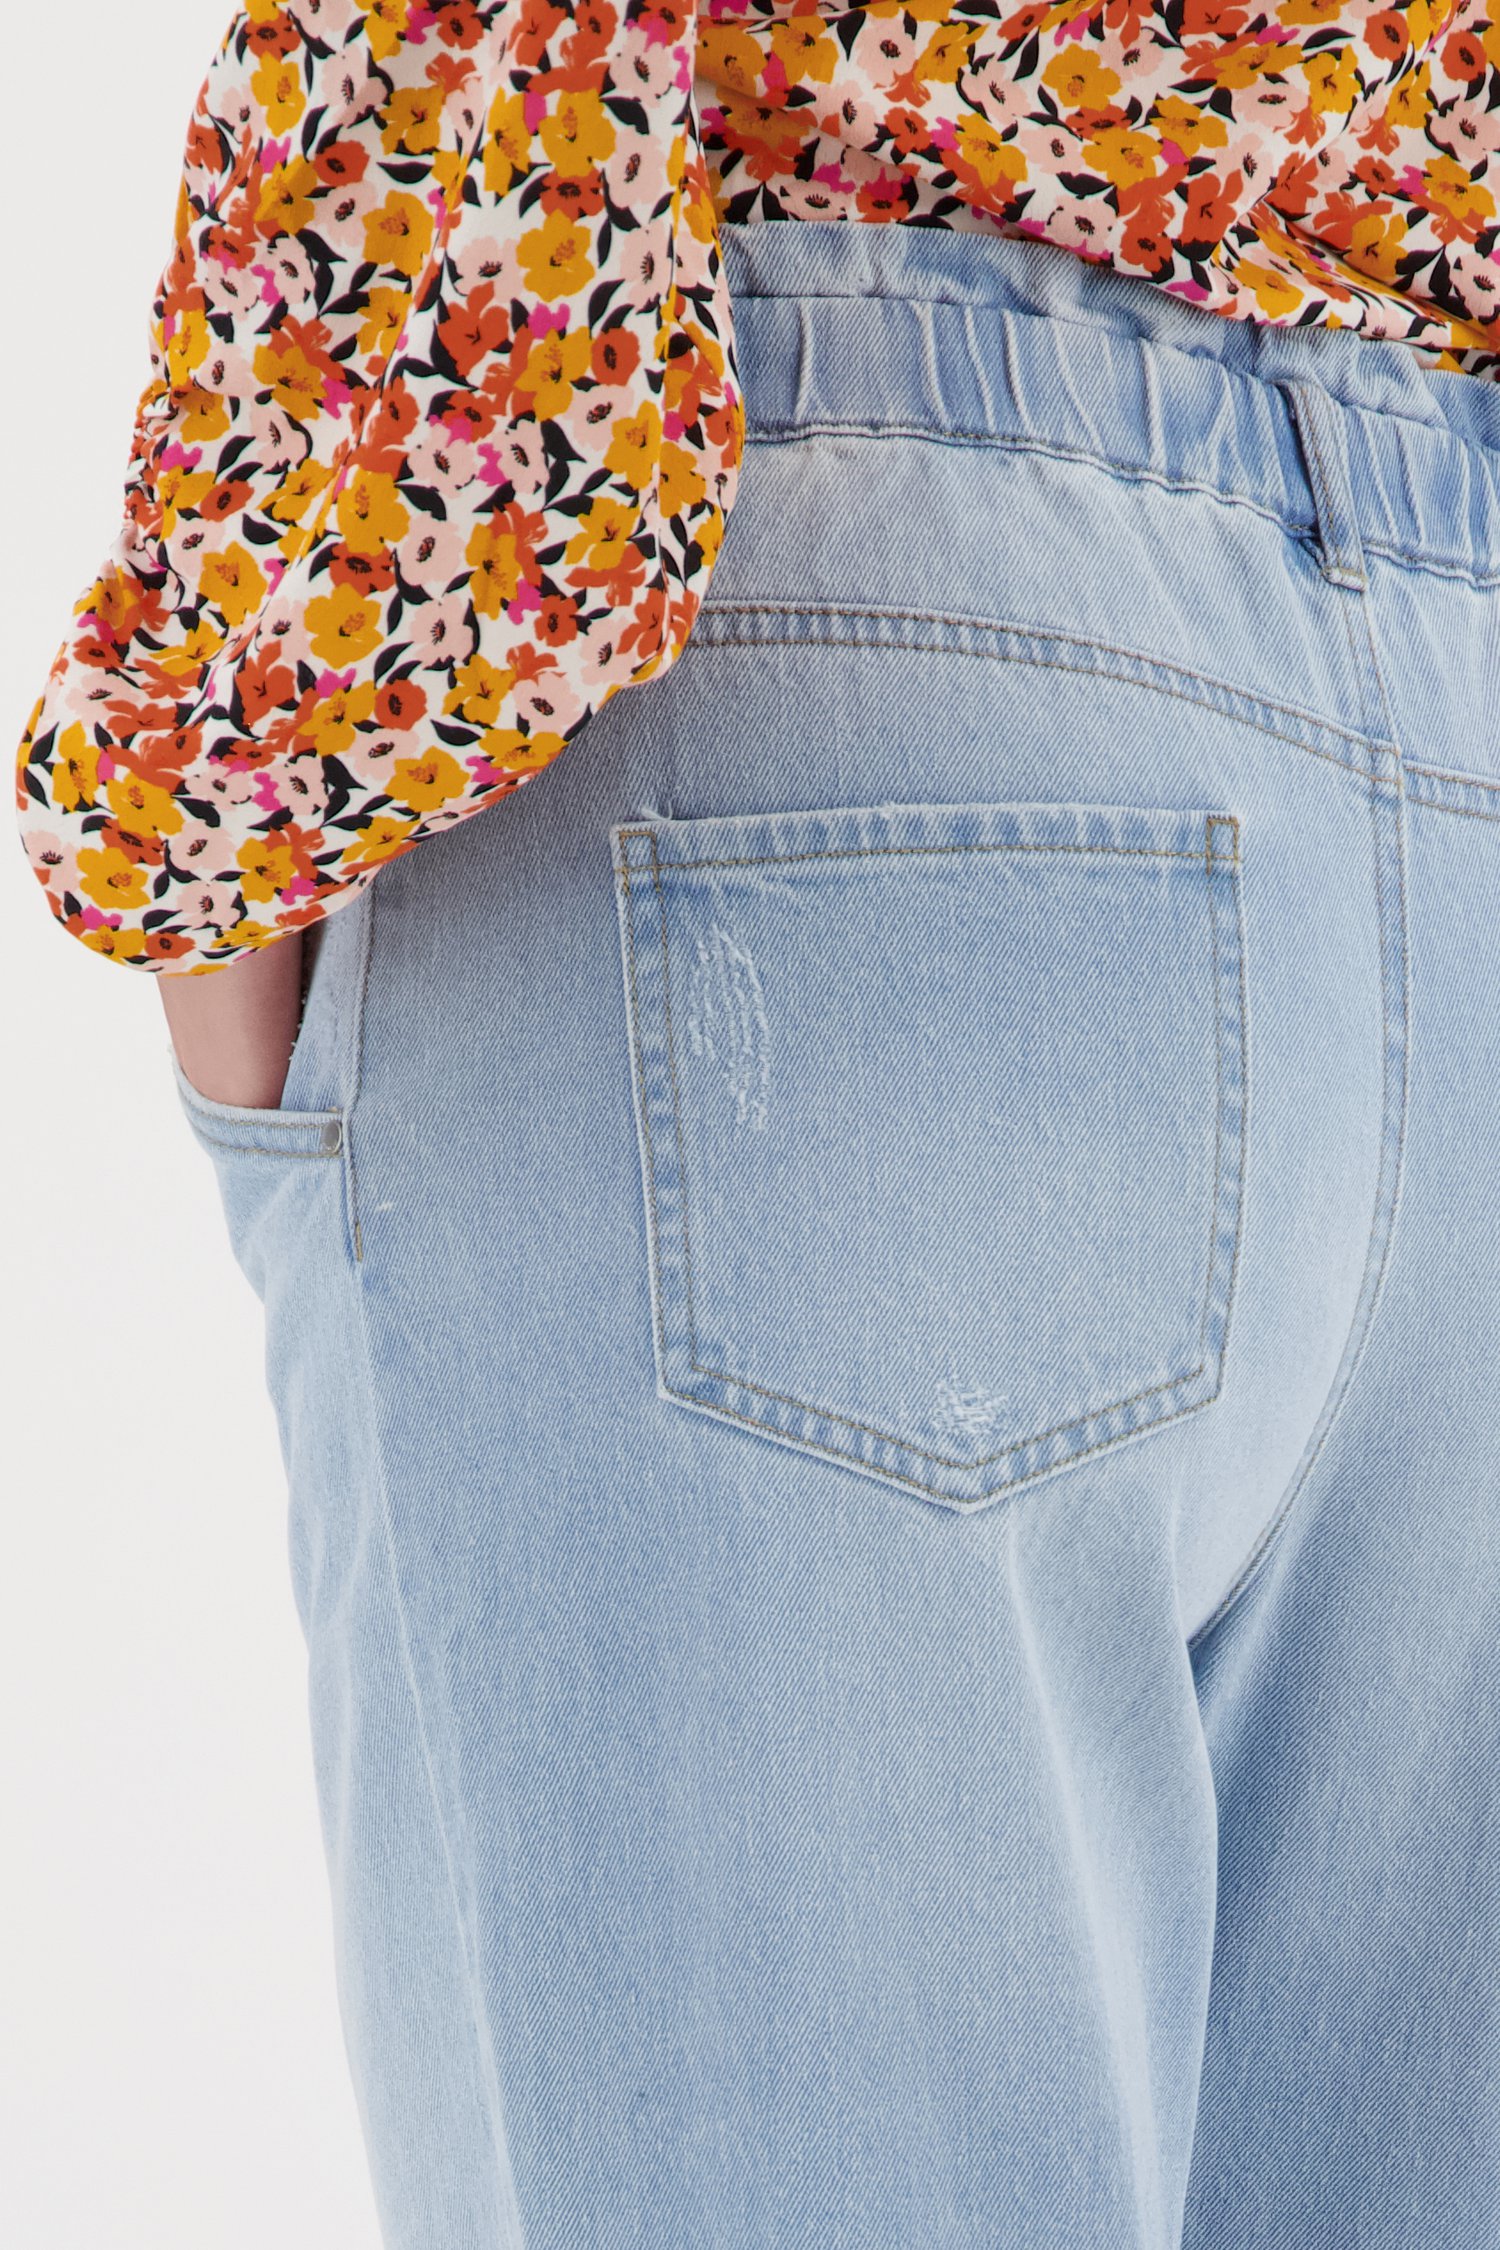 Lichtblauwe, high-waisted jeans - mom fit  van JDY voor Dames